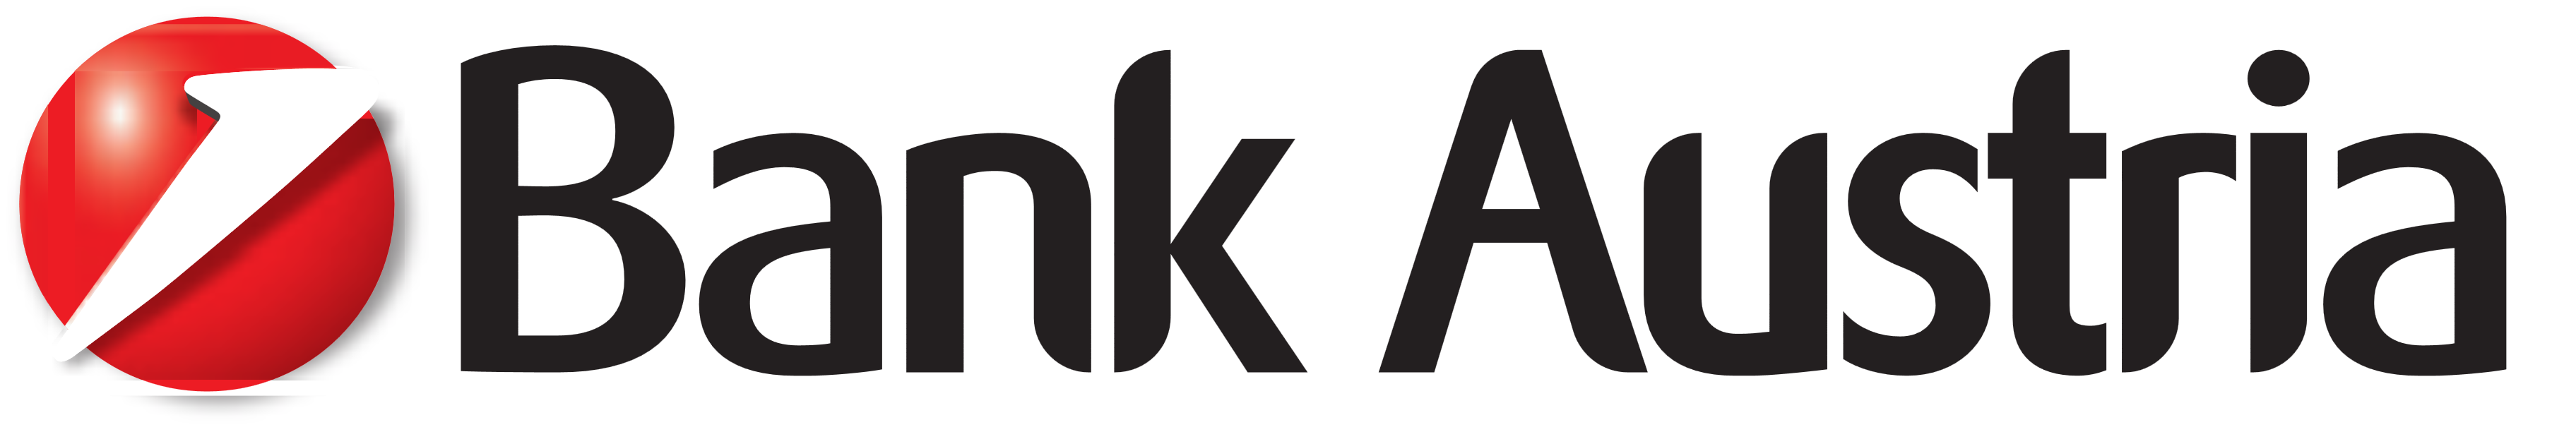 Bank Austria Brand Logo